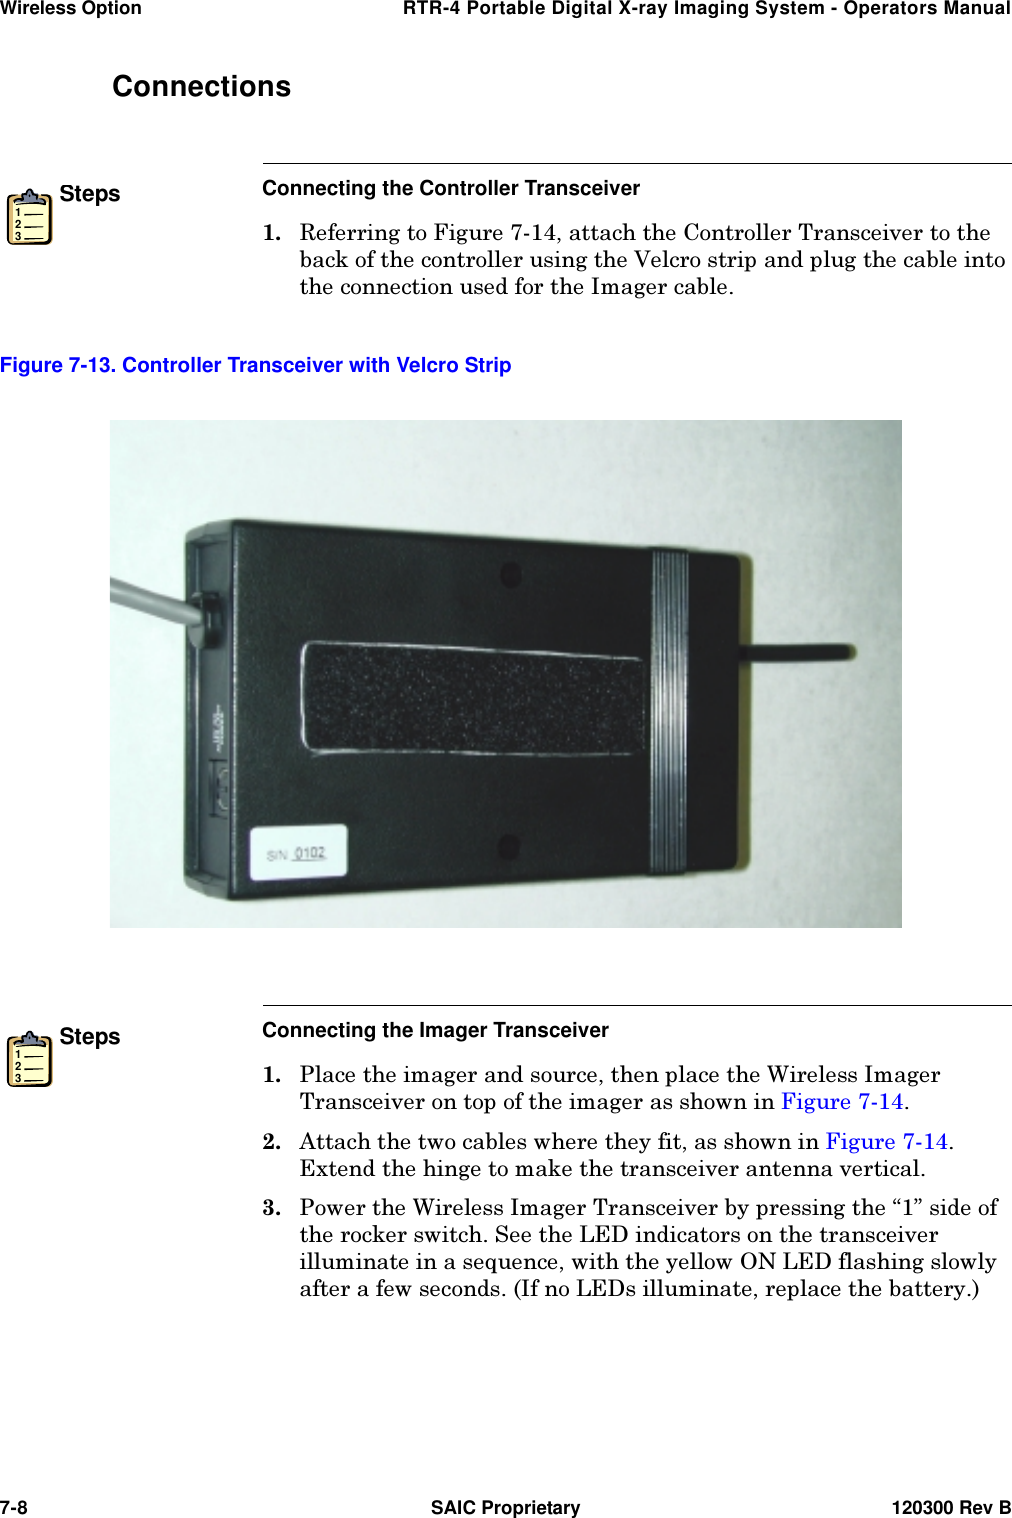 Wireless Option  RTR-4 Portable Digital X-ray Imaging System - Operators Manual7-8  SAIC Proprietary 120300 Rev BConnectionsSteps123Connecting the Controller Transceiver 5HIHUULQJWR)LJXUHDWWDFKWKH&amp;RQWUROOHU7UDQVFHLYHUWRWKHEDFNRIWKHFRQWUROOHUXVLQJWKH9HOFURVWULSDQGSOXJWKHFDEOHLQWRWKHFRQQHFWLRQXVHGIRUWKH,PDJHUFDEOHSteps123Connecting the Imager Transceiver 3ODFHWKHLPDJHUDQGVRXUFHWKHQSODFHWKH:LUHOHVV,PDJHU7UDQVFHLYHURQWRSRIWKHLPDJHUDVVKRZQLQ)LJXUH  $WWDFKWKHWZRFDEOHVZKHUHWKH\ILWDVVKRZQLQ)LJXUH ([WHQGWKHKLQJHWRPDNHWKHWUDQVFHLYHUDQWHQQDYHUWLFDO 3RZHUWKH:LUHOHVV,PDJHU7UDQVFHLYHUE\SUHVVLQJWKH´µVLGHRIWKHURFNHUVZLWFK6HHWKH/(&apos;LQGLFDWRUVRQWKHWUDQVFHLYHULOOXPLQDWHLQDVHTXHQFHZLWKWKH\HOORZ21/(&apos;IODVKLQJVORZO\DIWHUDIHZVHFRQGV,IQR/(&apos;VLOOXPLQDWHUHSODFHWKHEDWWHU\Figure 7-13. Controller Transceiver with Velcro Strip